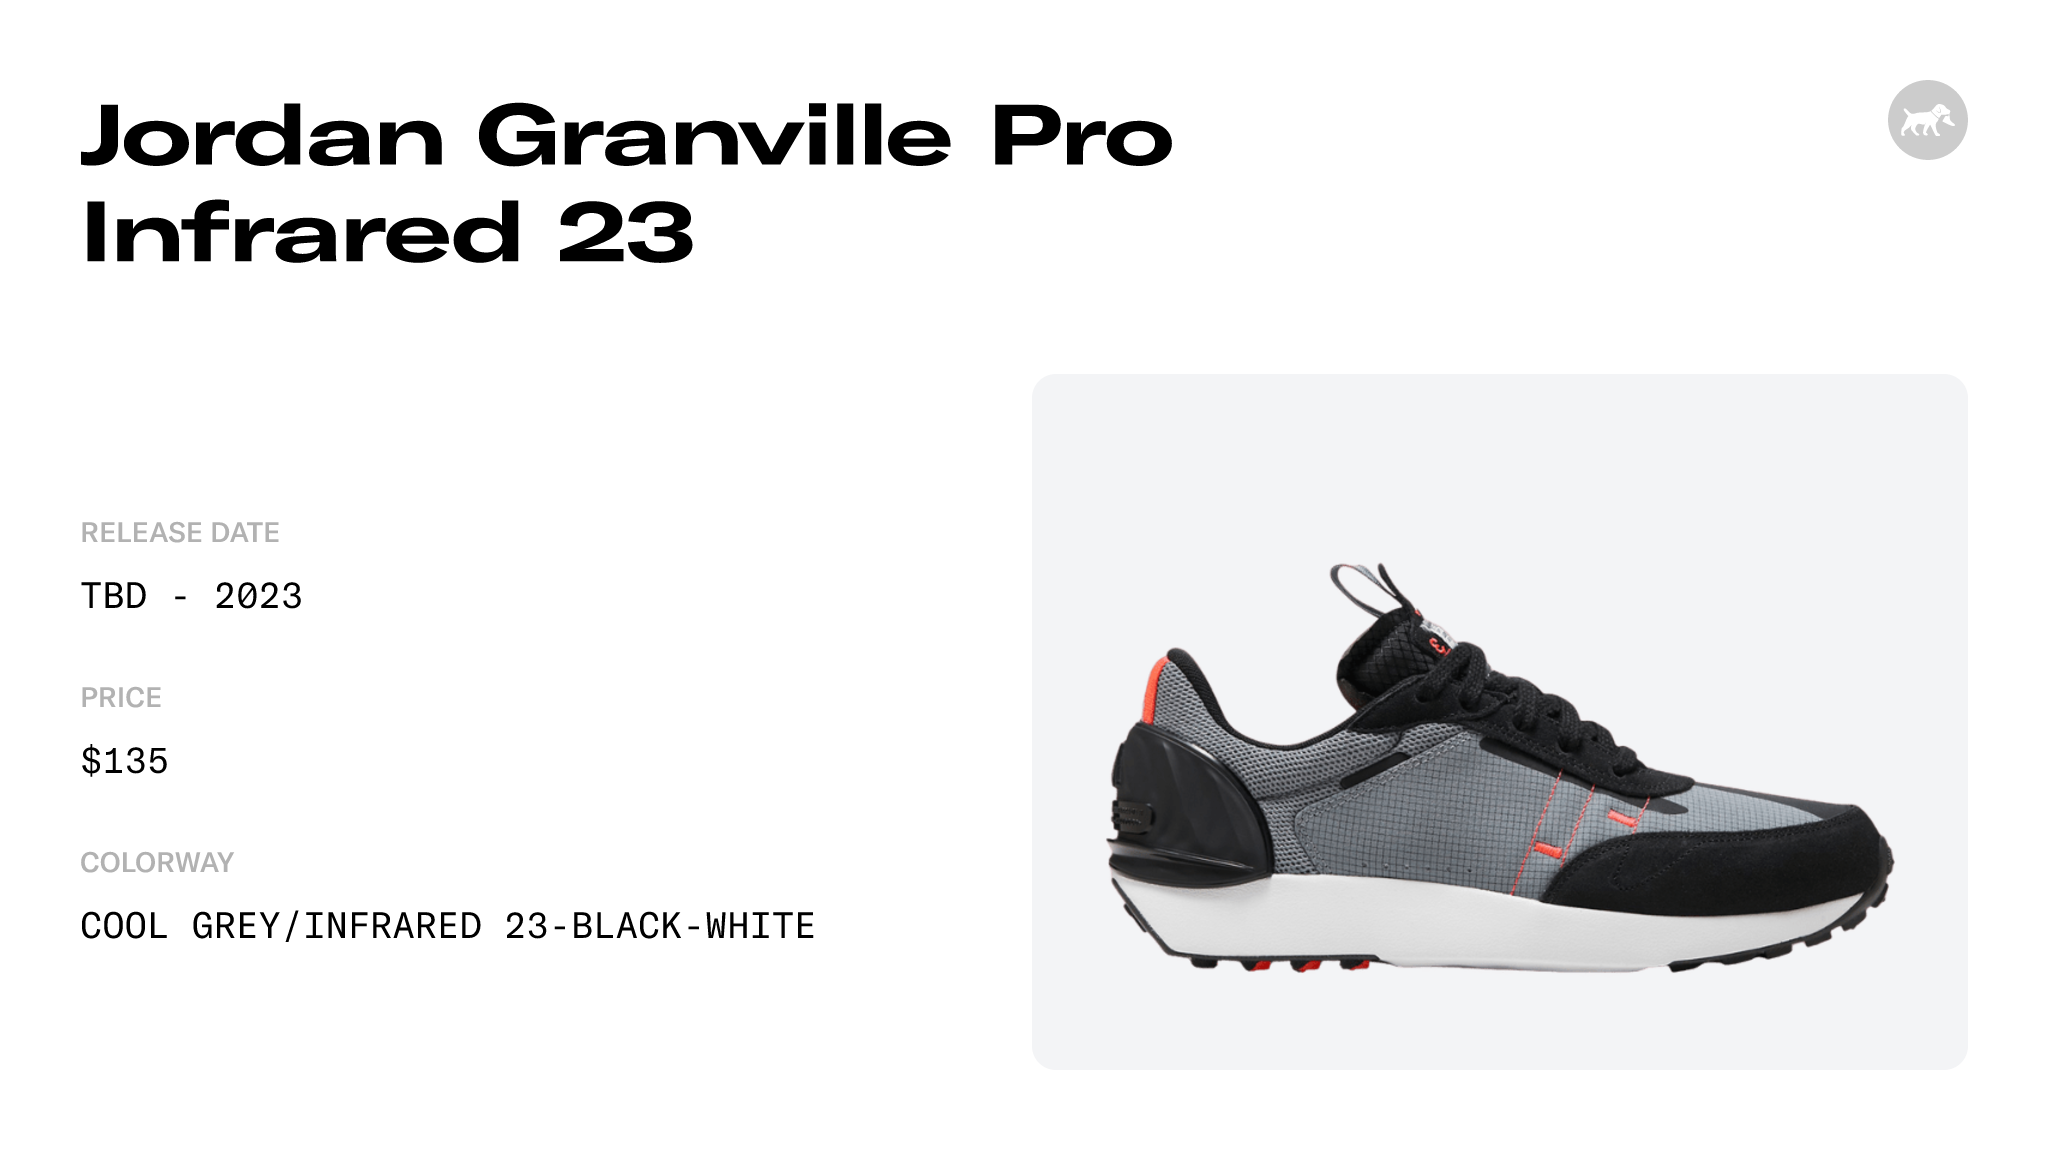 Jordan Granville Pro Infrared 23 - DV1235-001 Raffles and Release Date